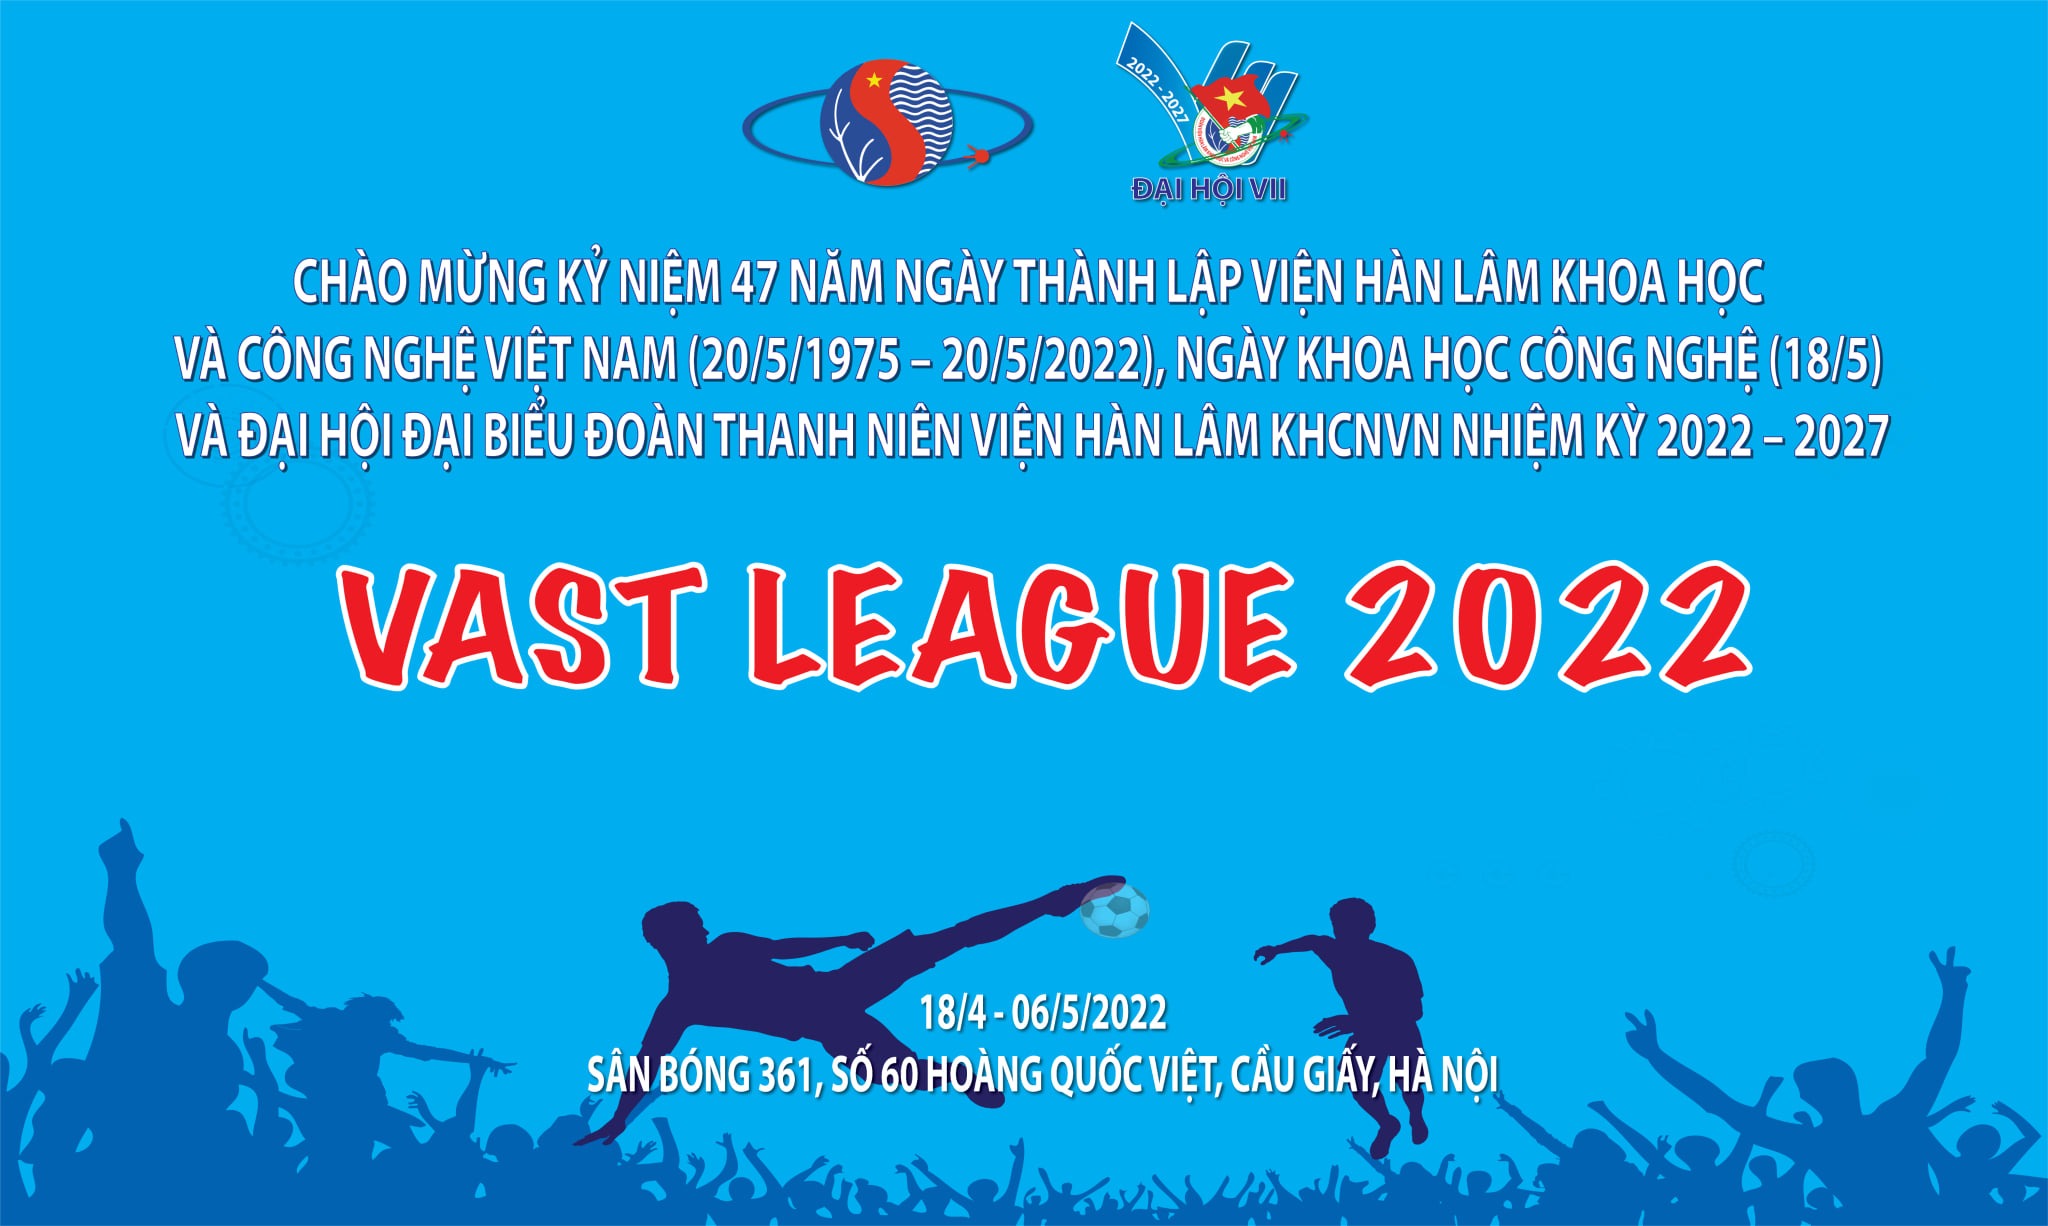 VAST League 2022 khu vực phía Bắc